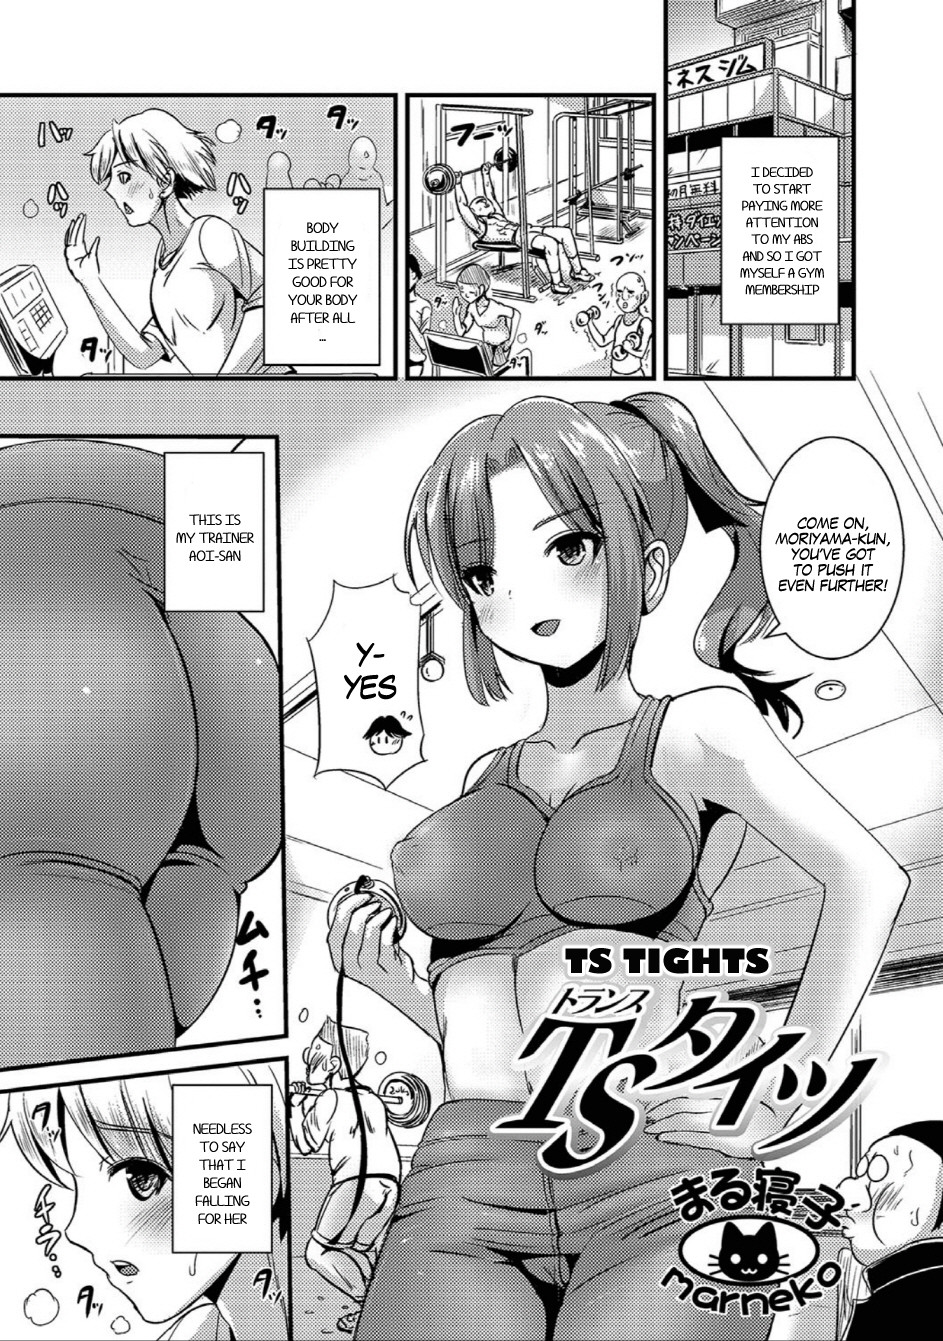 Hentai Manga Comic-TS Tights-Read-1